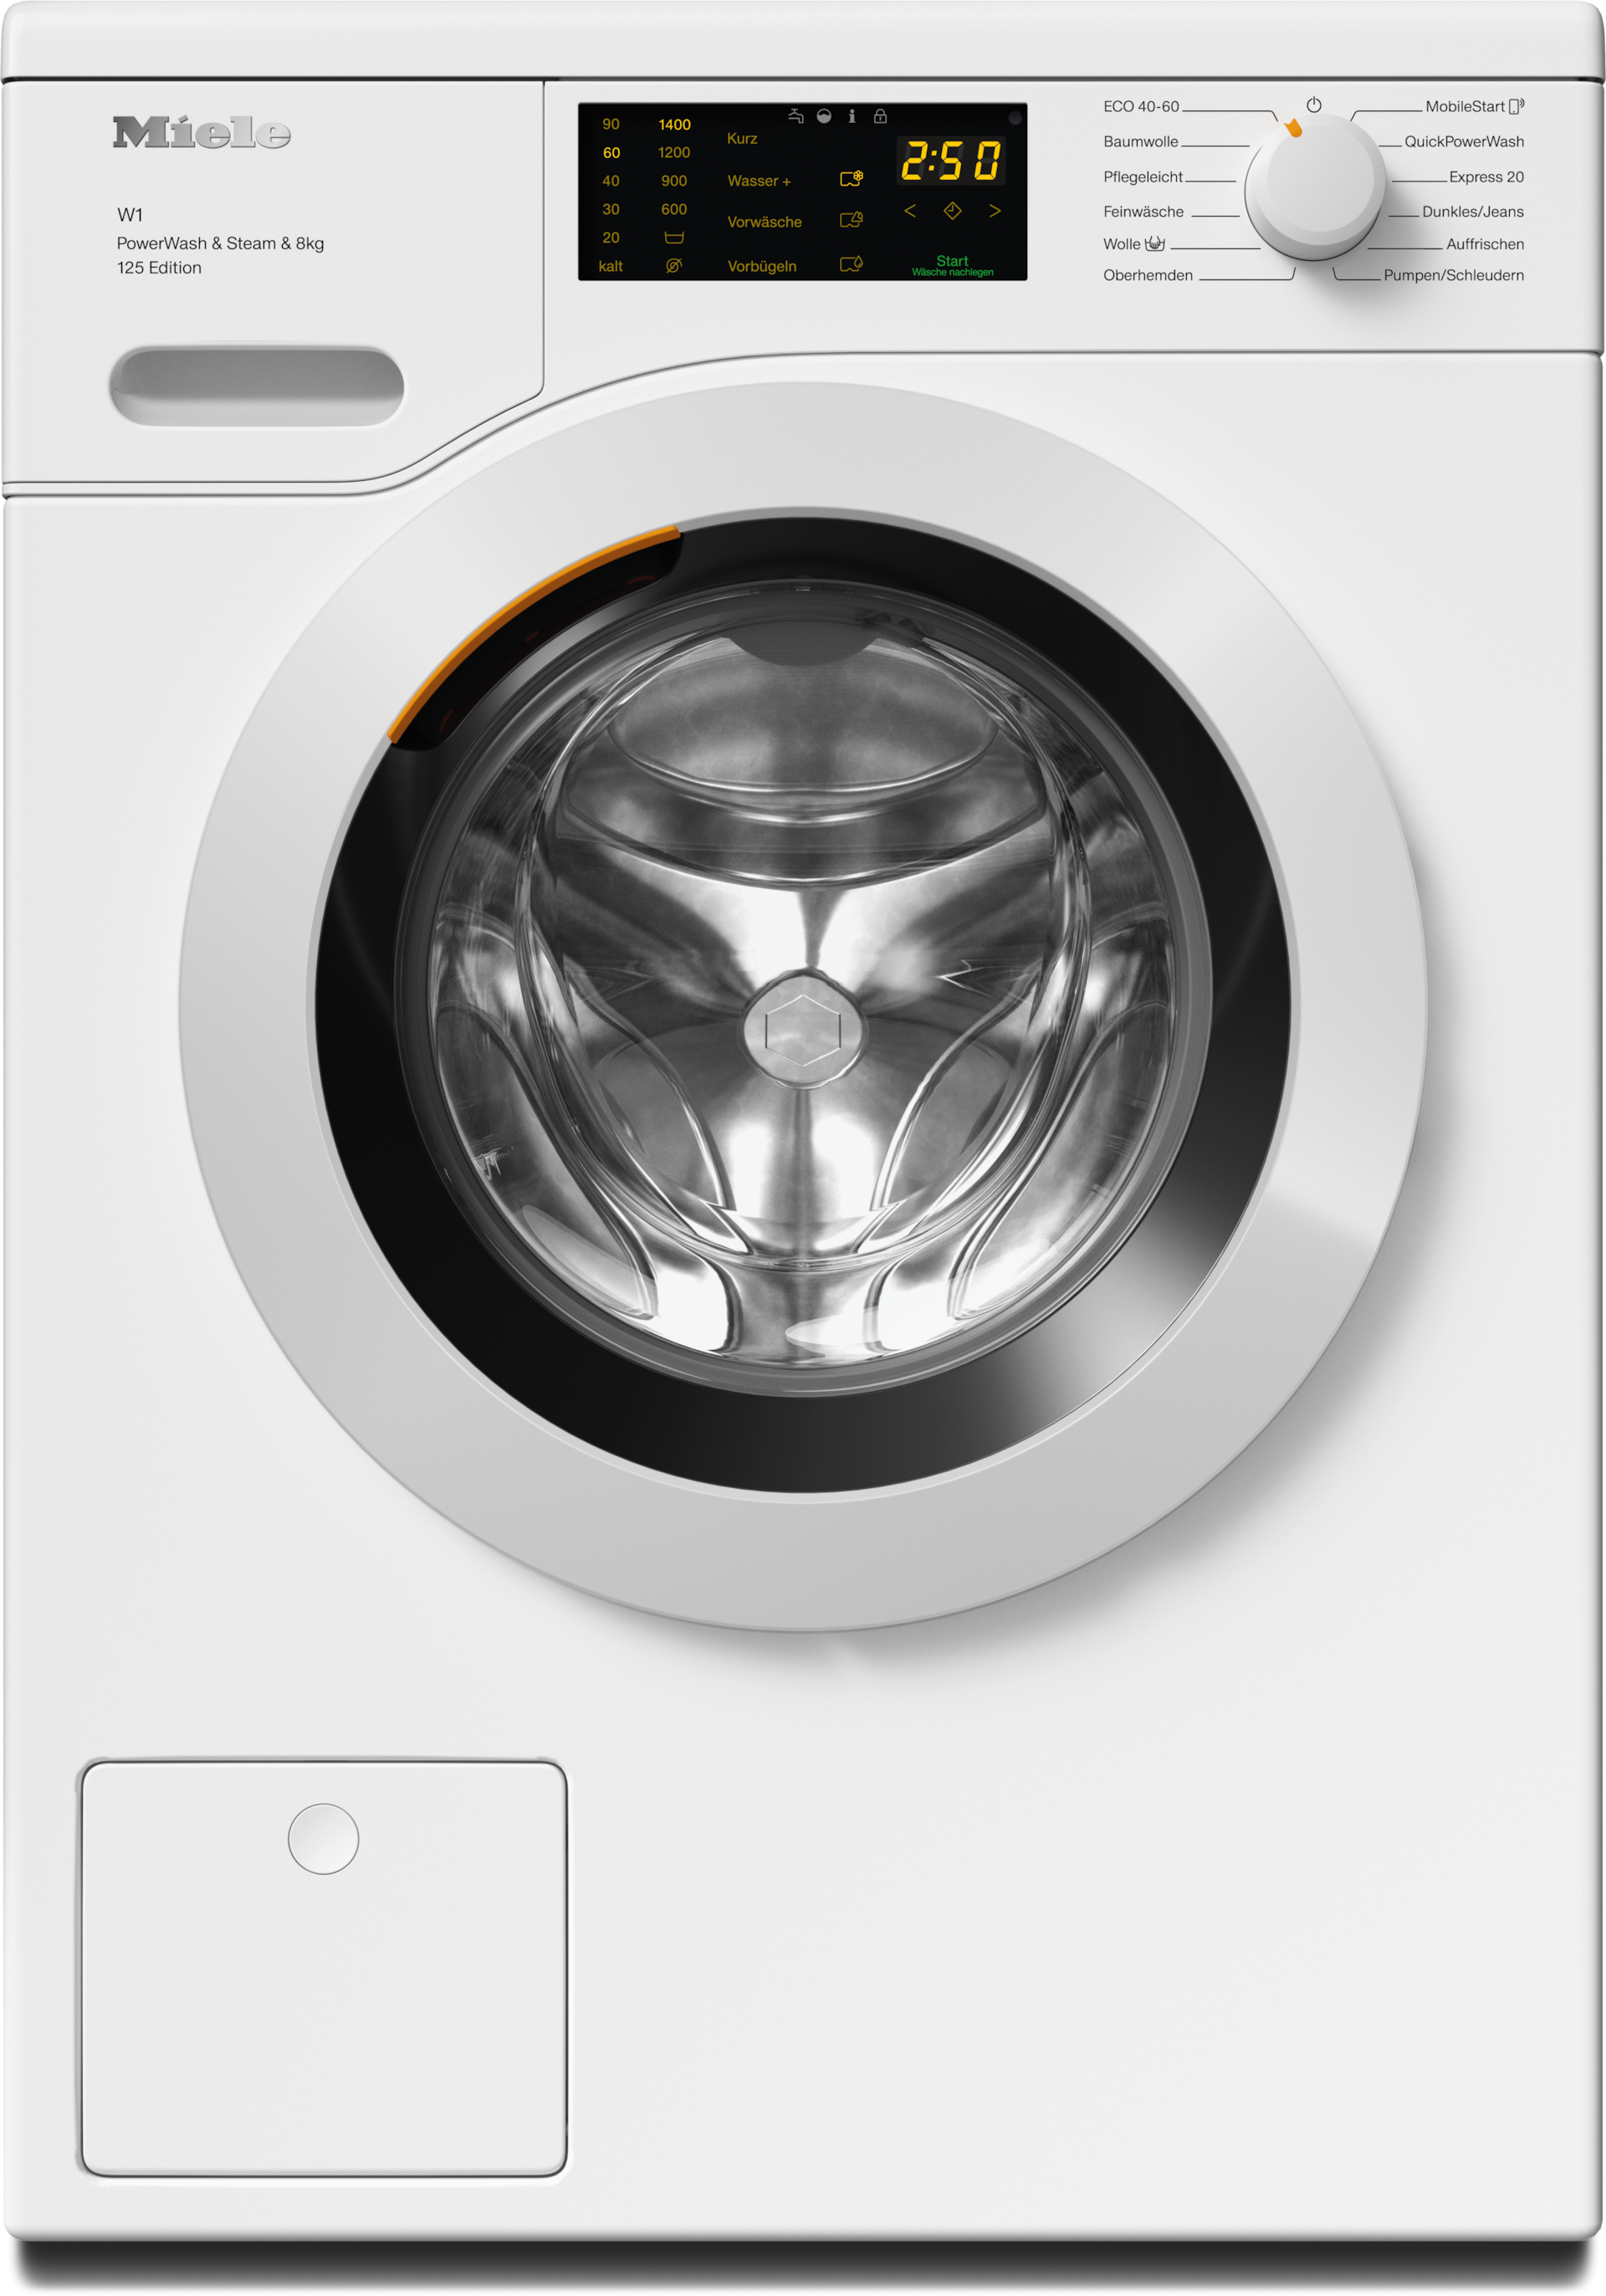 Washing machines - WCB380 WPS 125 Edition Lopoč bijela - 1